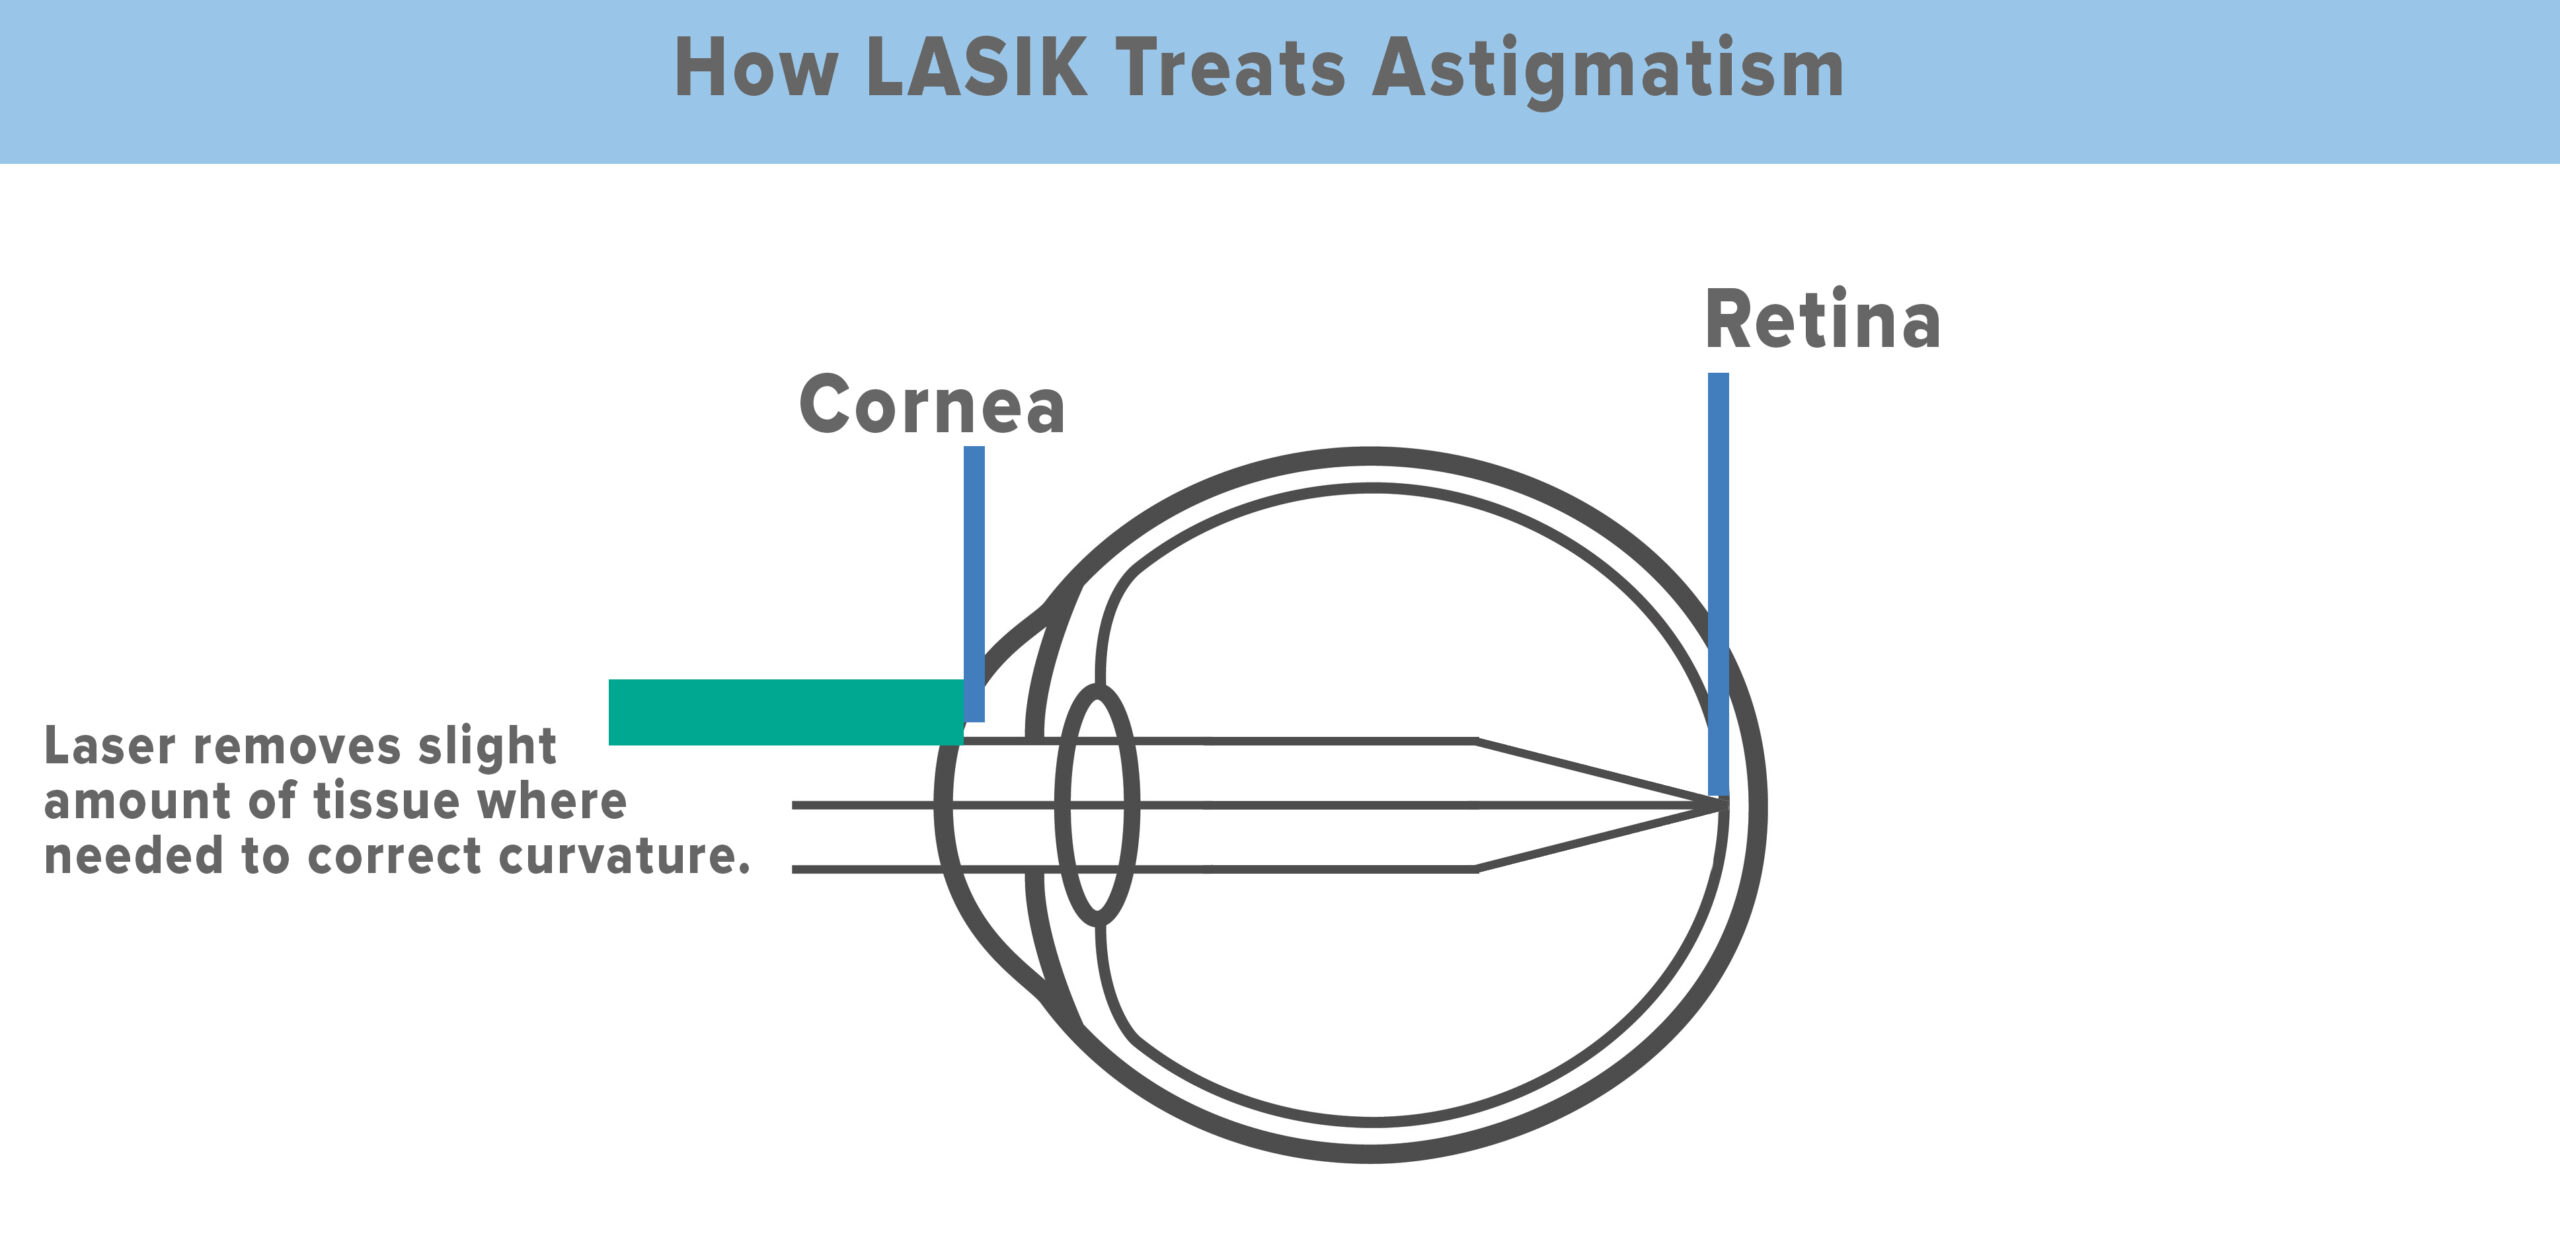 Diagram showing how LASIK treats astigmatism